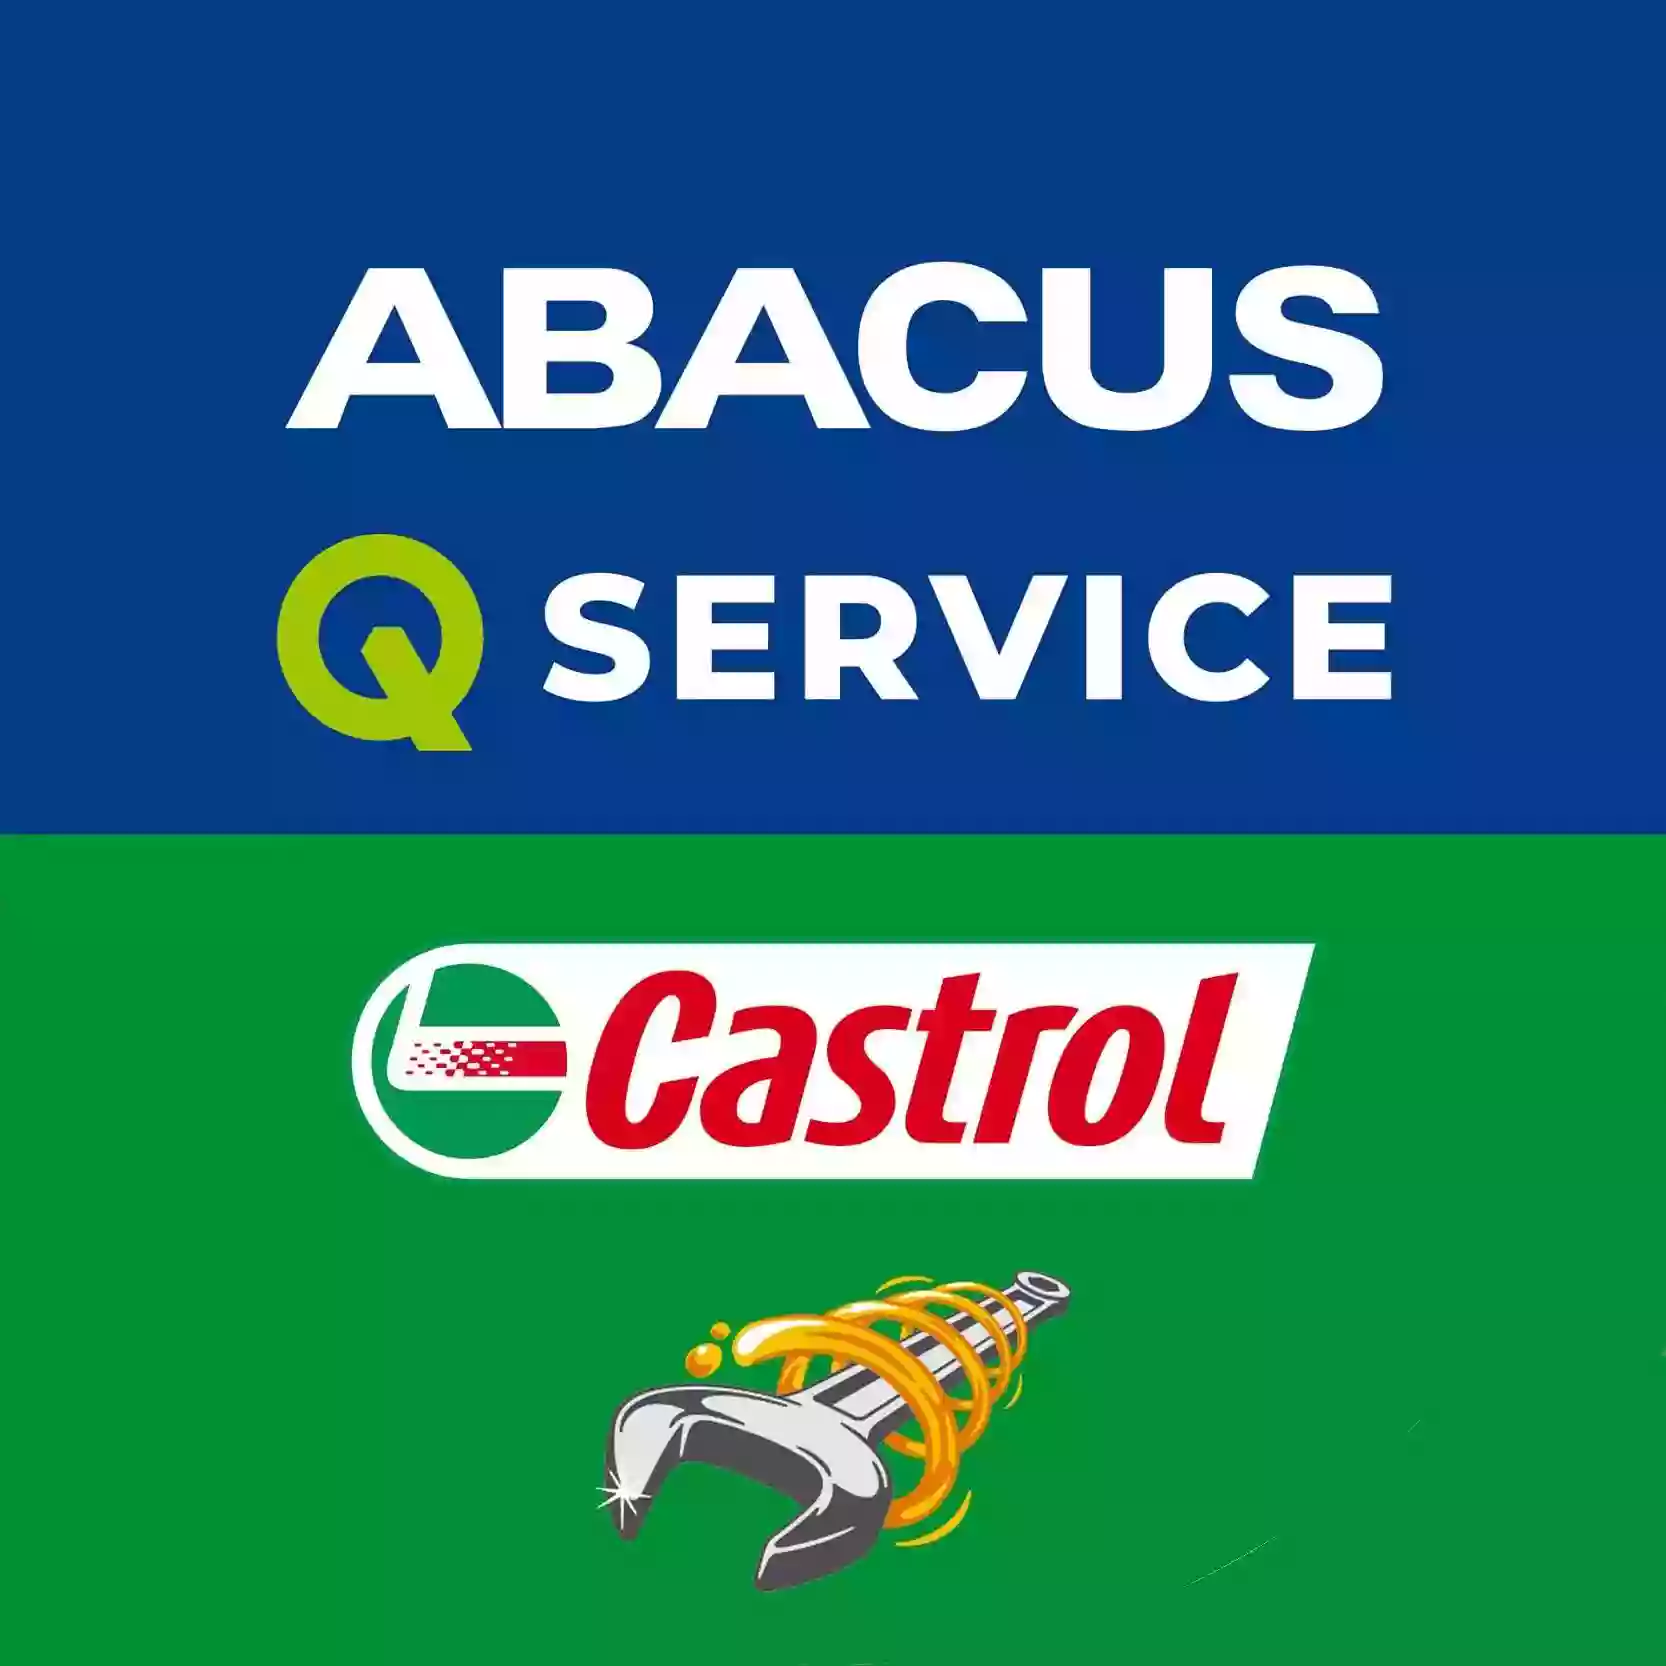 Q Service Castrol ABACUS